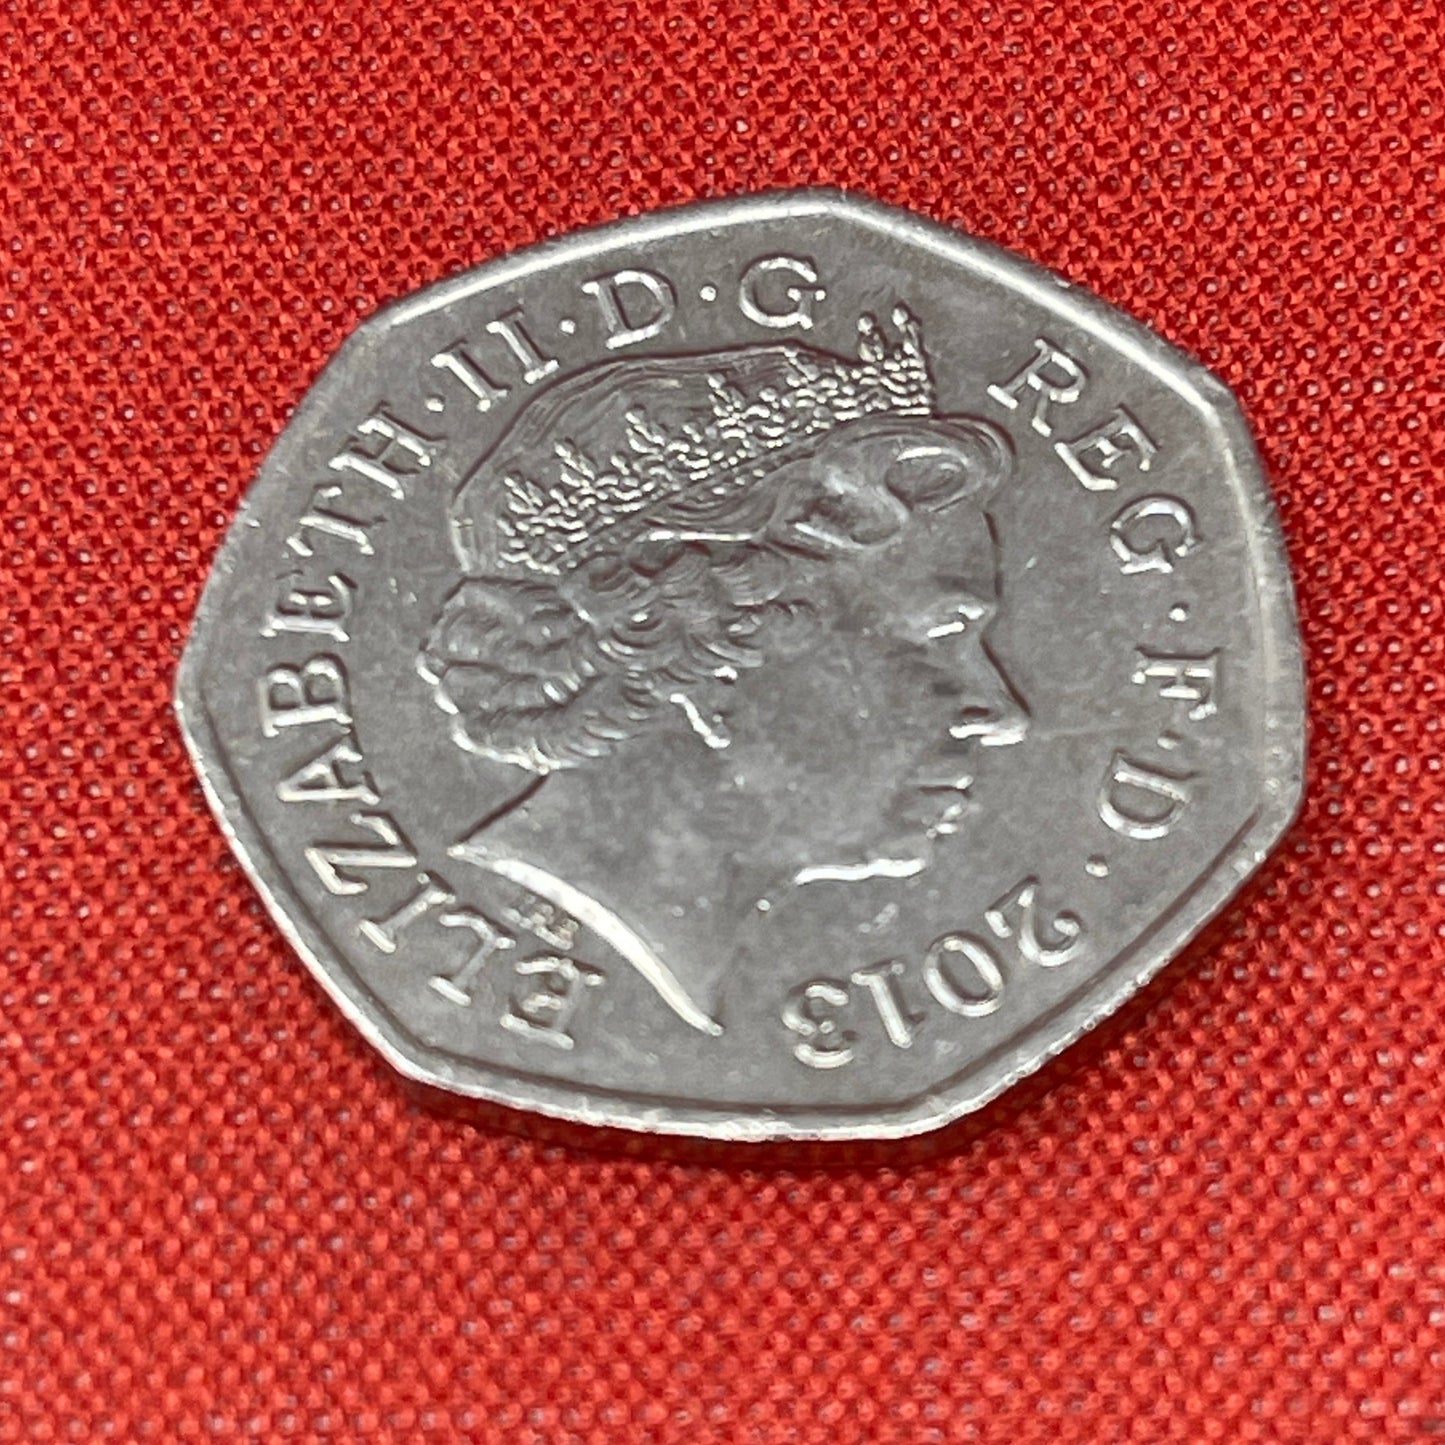 QEII 2013 50 Pence Coin Circulated